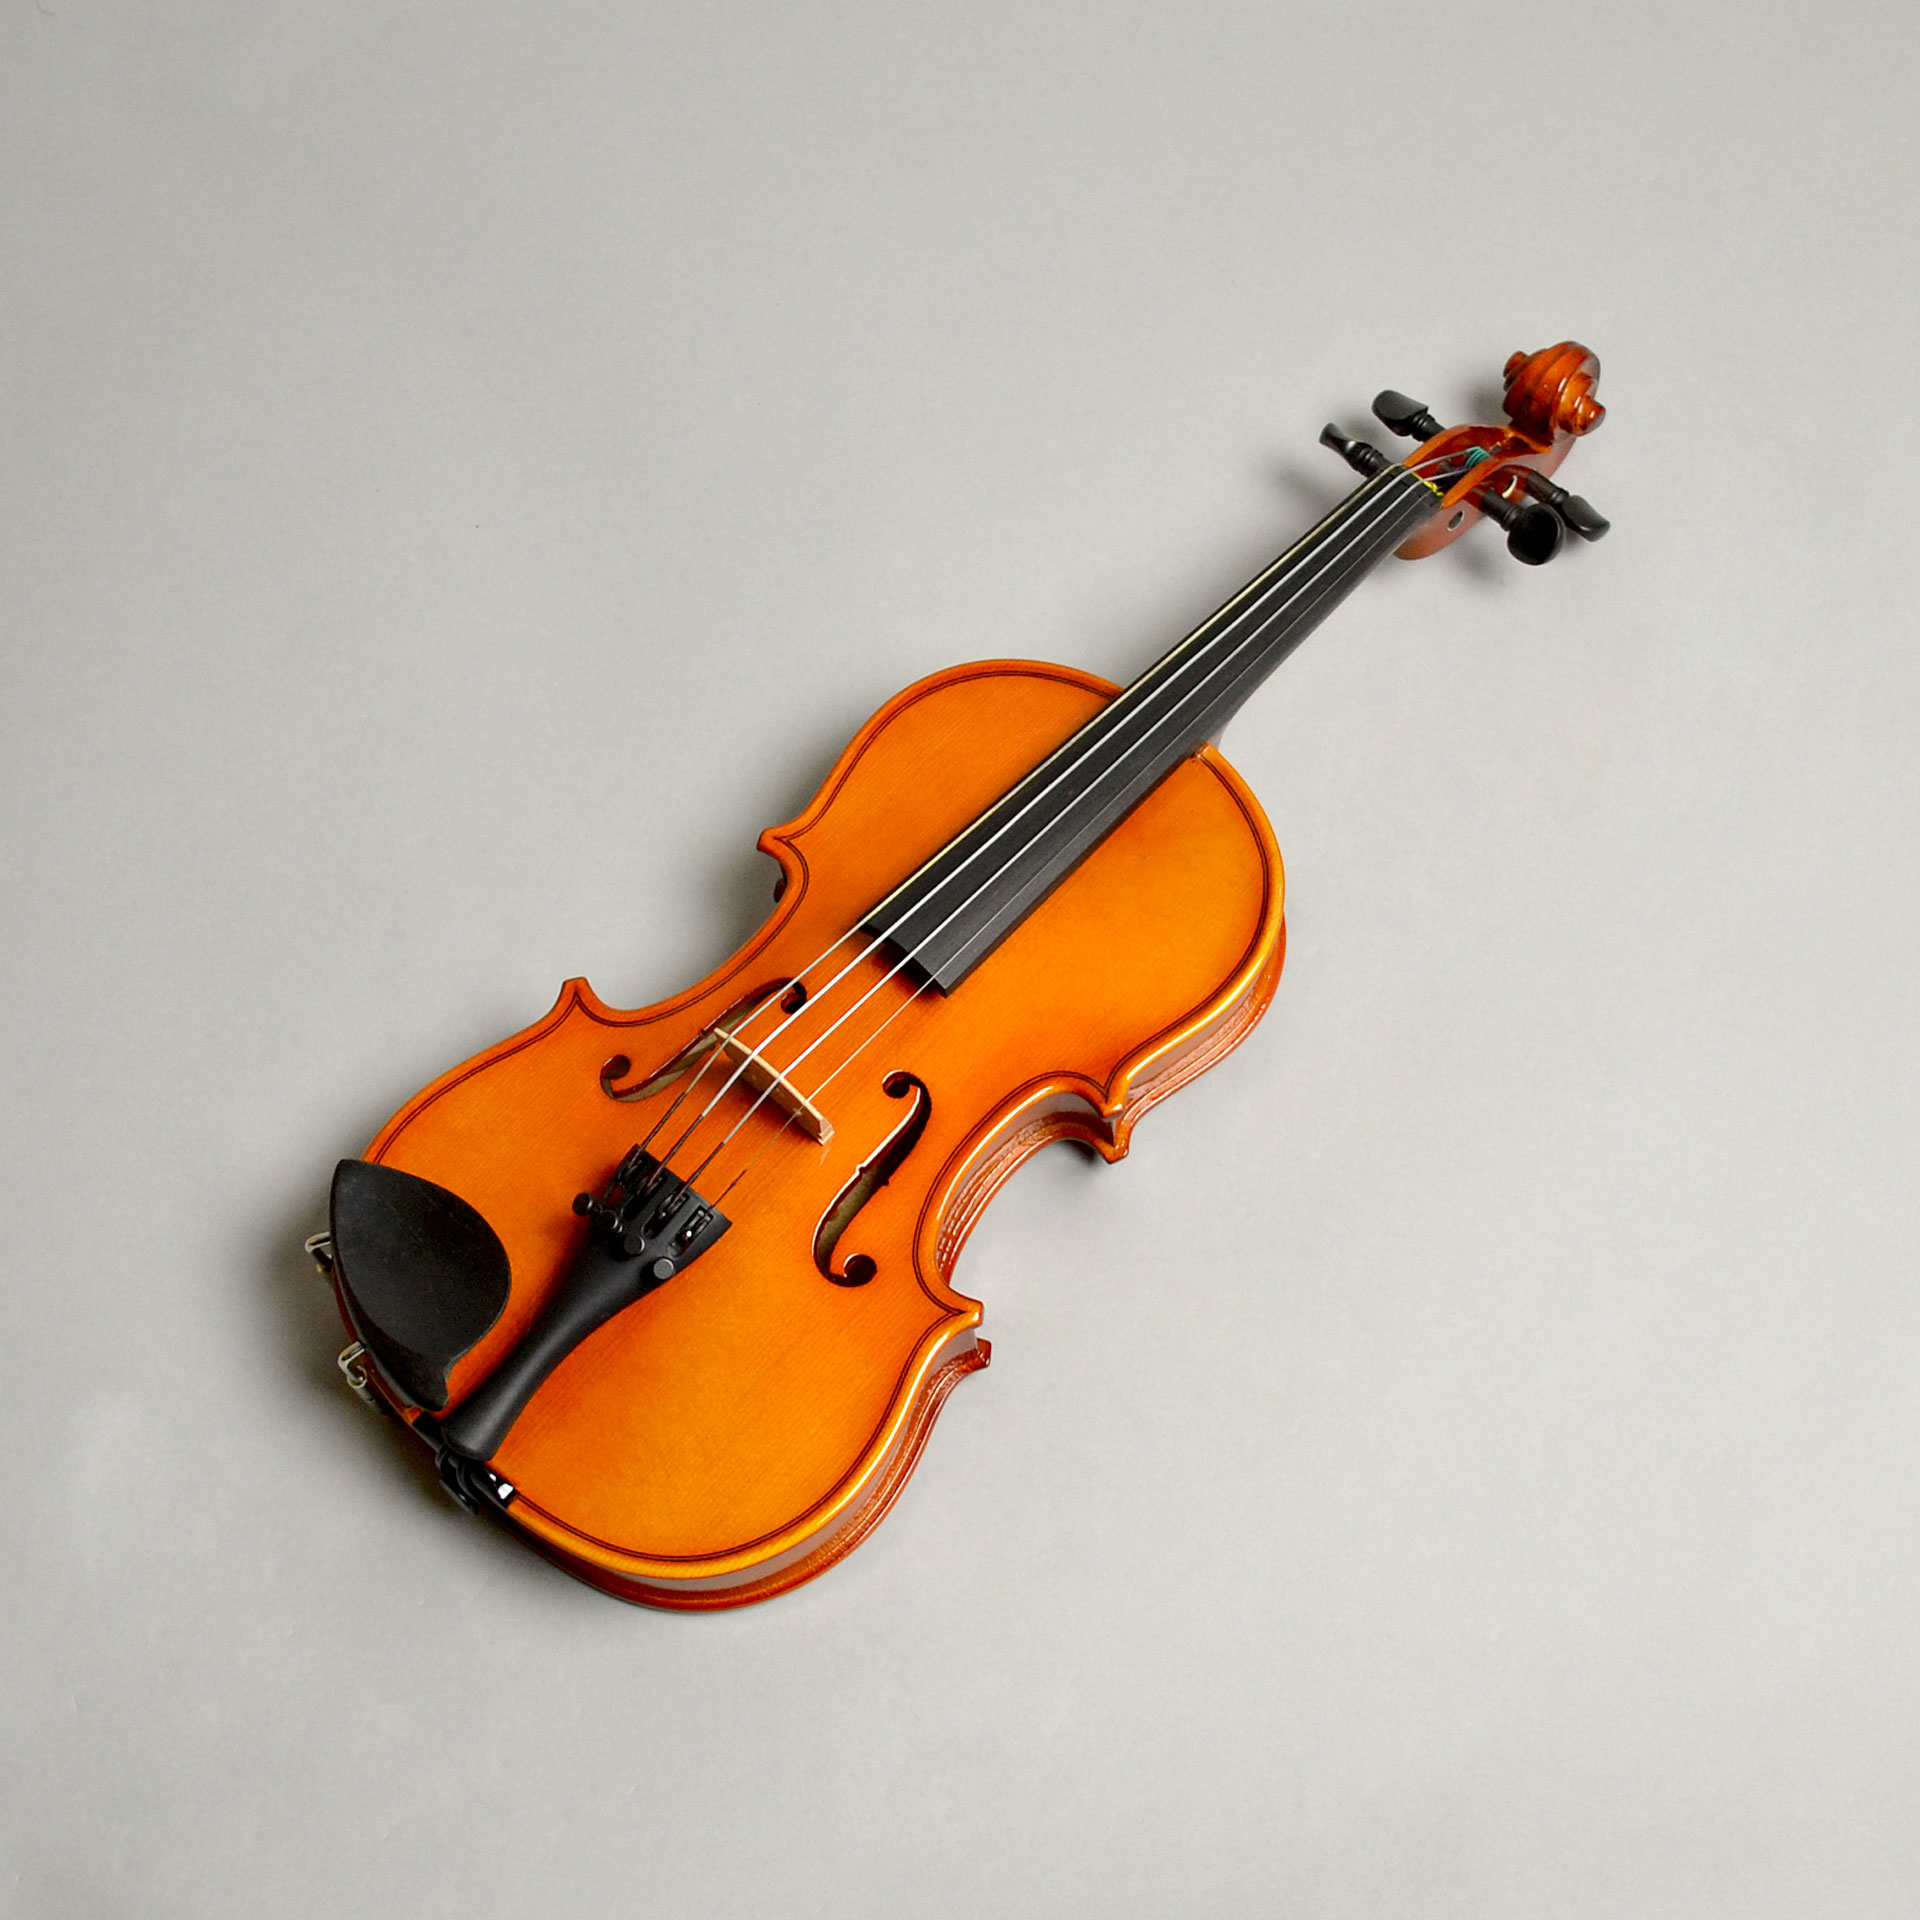 Carlo giordano バイオリン vs-3 4/4 弦楽器 - 弦楽器